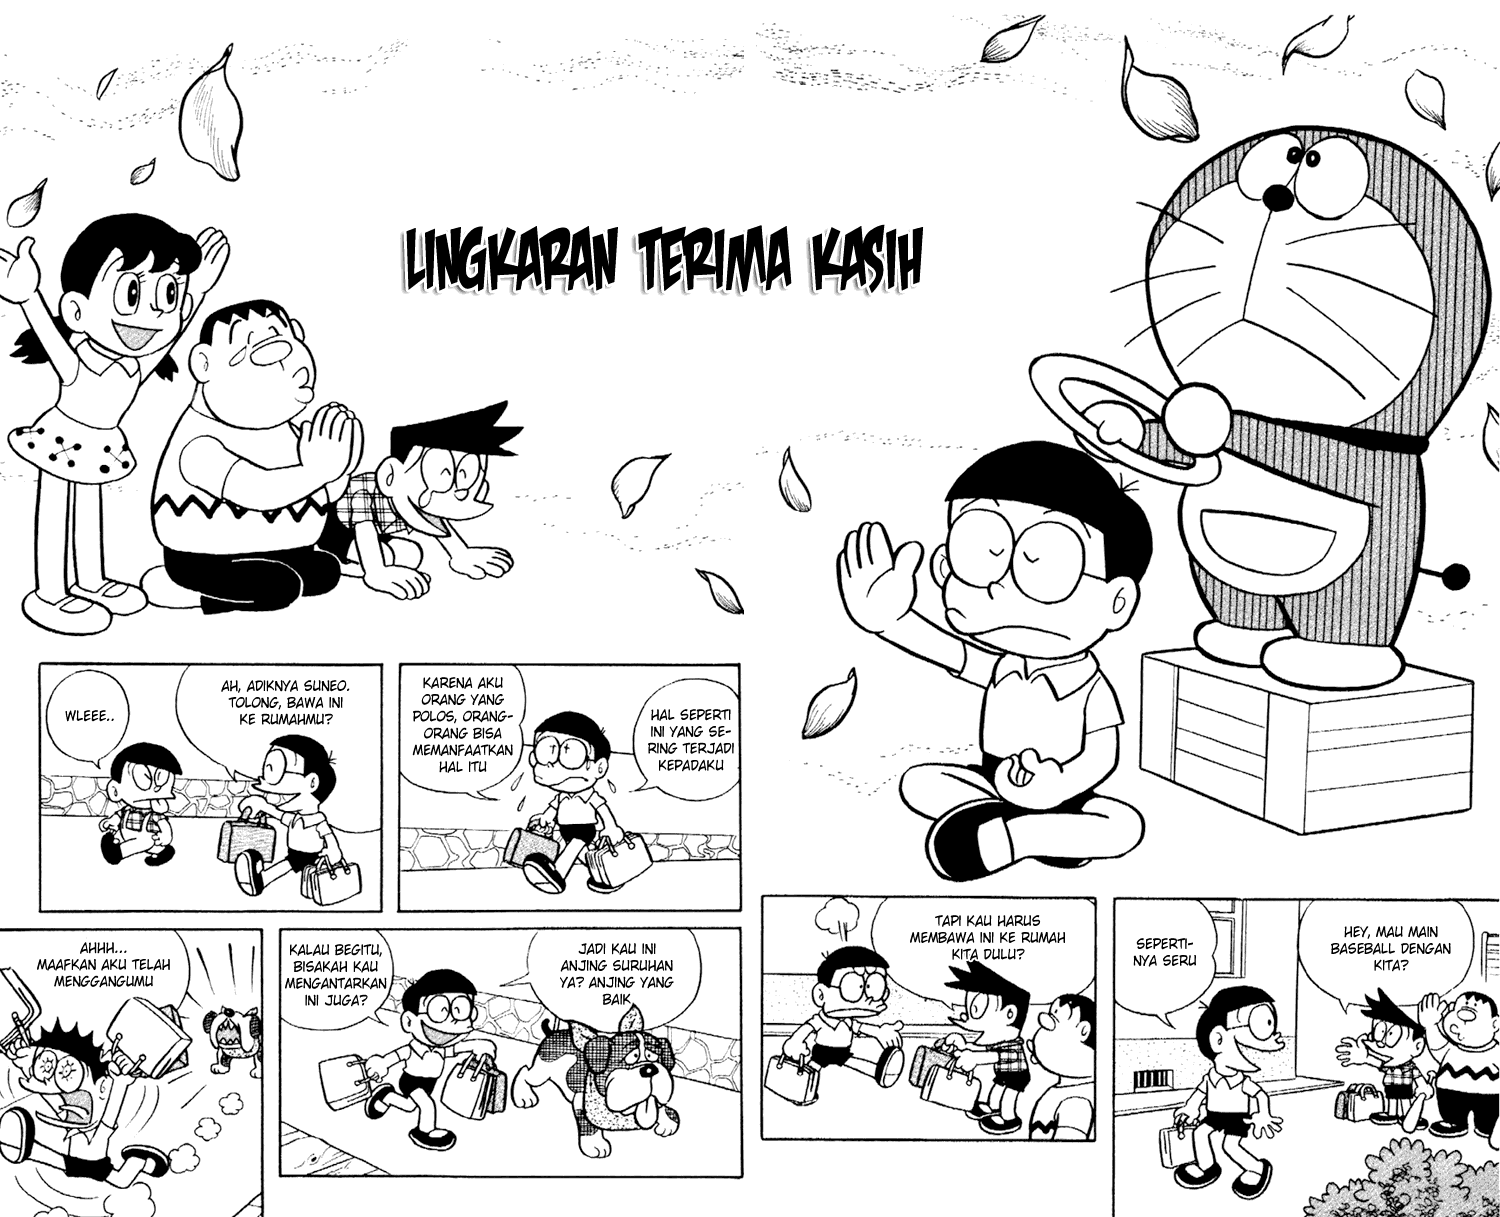 Doraemon Plus Volume 3 Chapter 39 Bahasa Indonesia Online PosManga